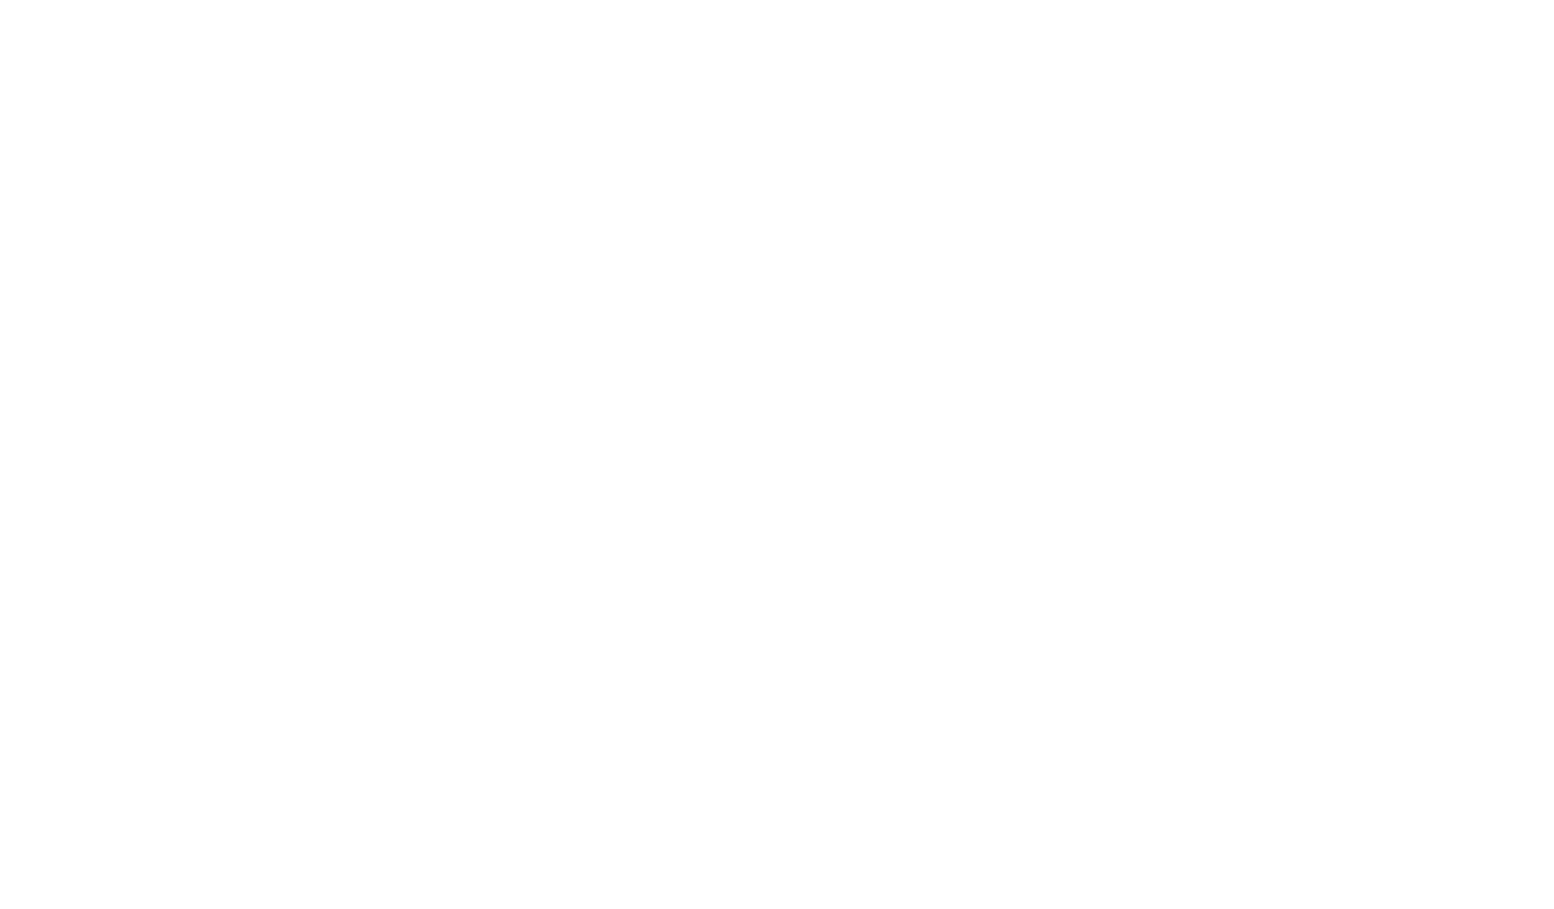 Wirtualna Polska (WP Holding) logo for dark backgrounds (transparent PNG)